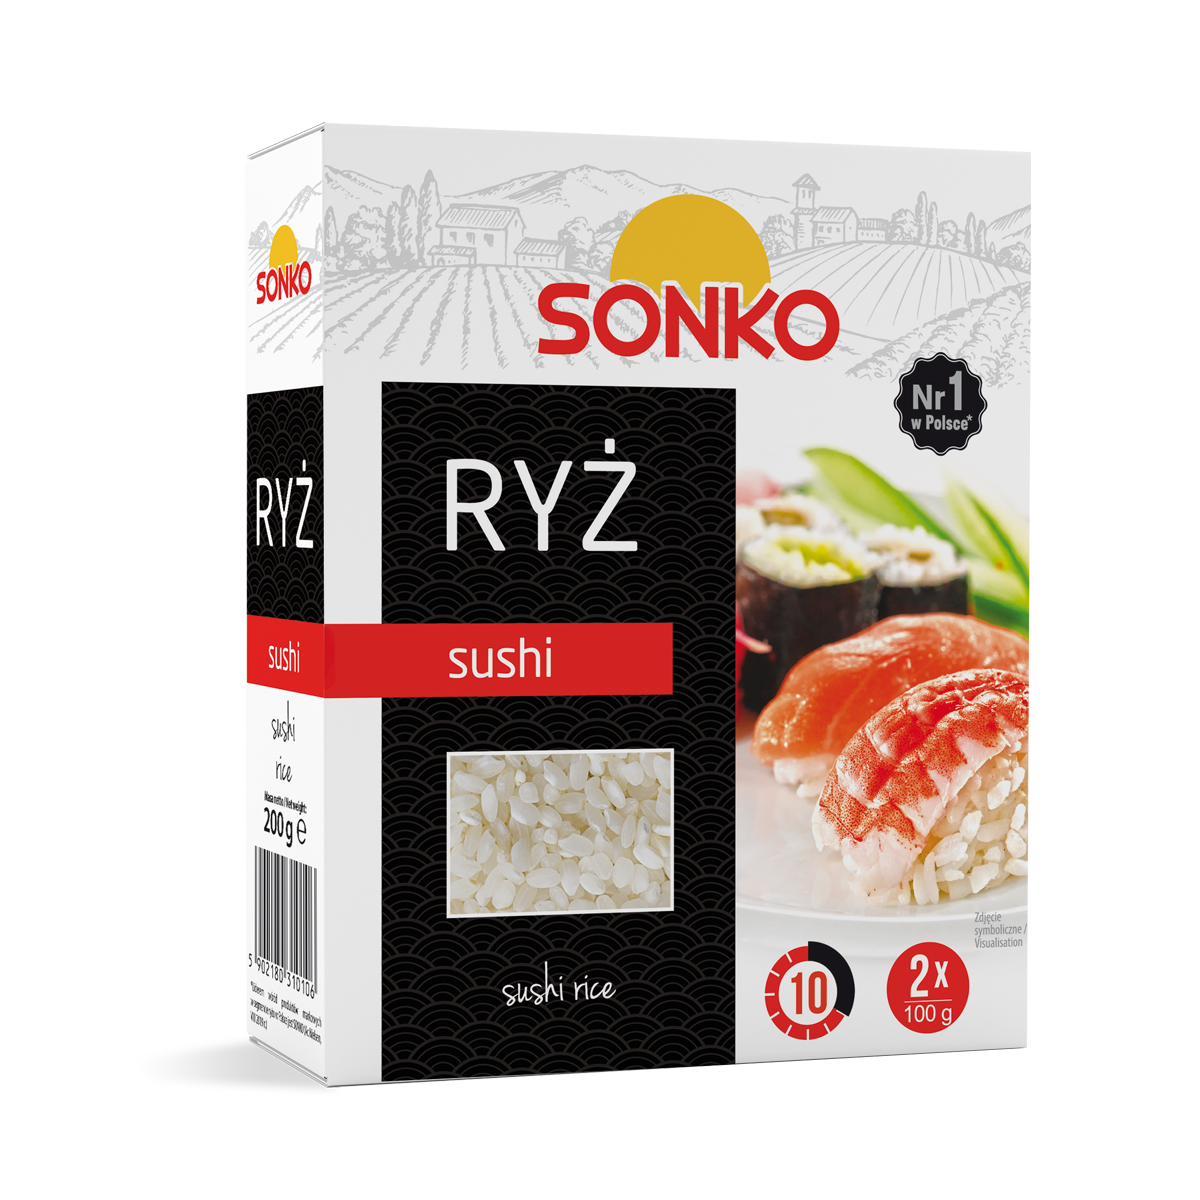 Risana sushi rice